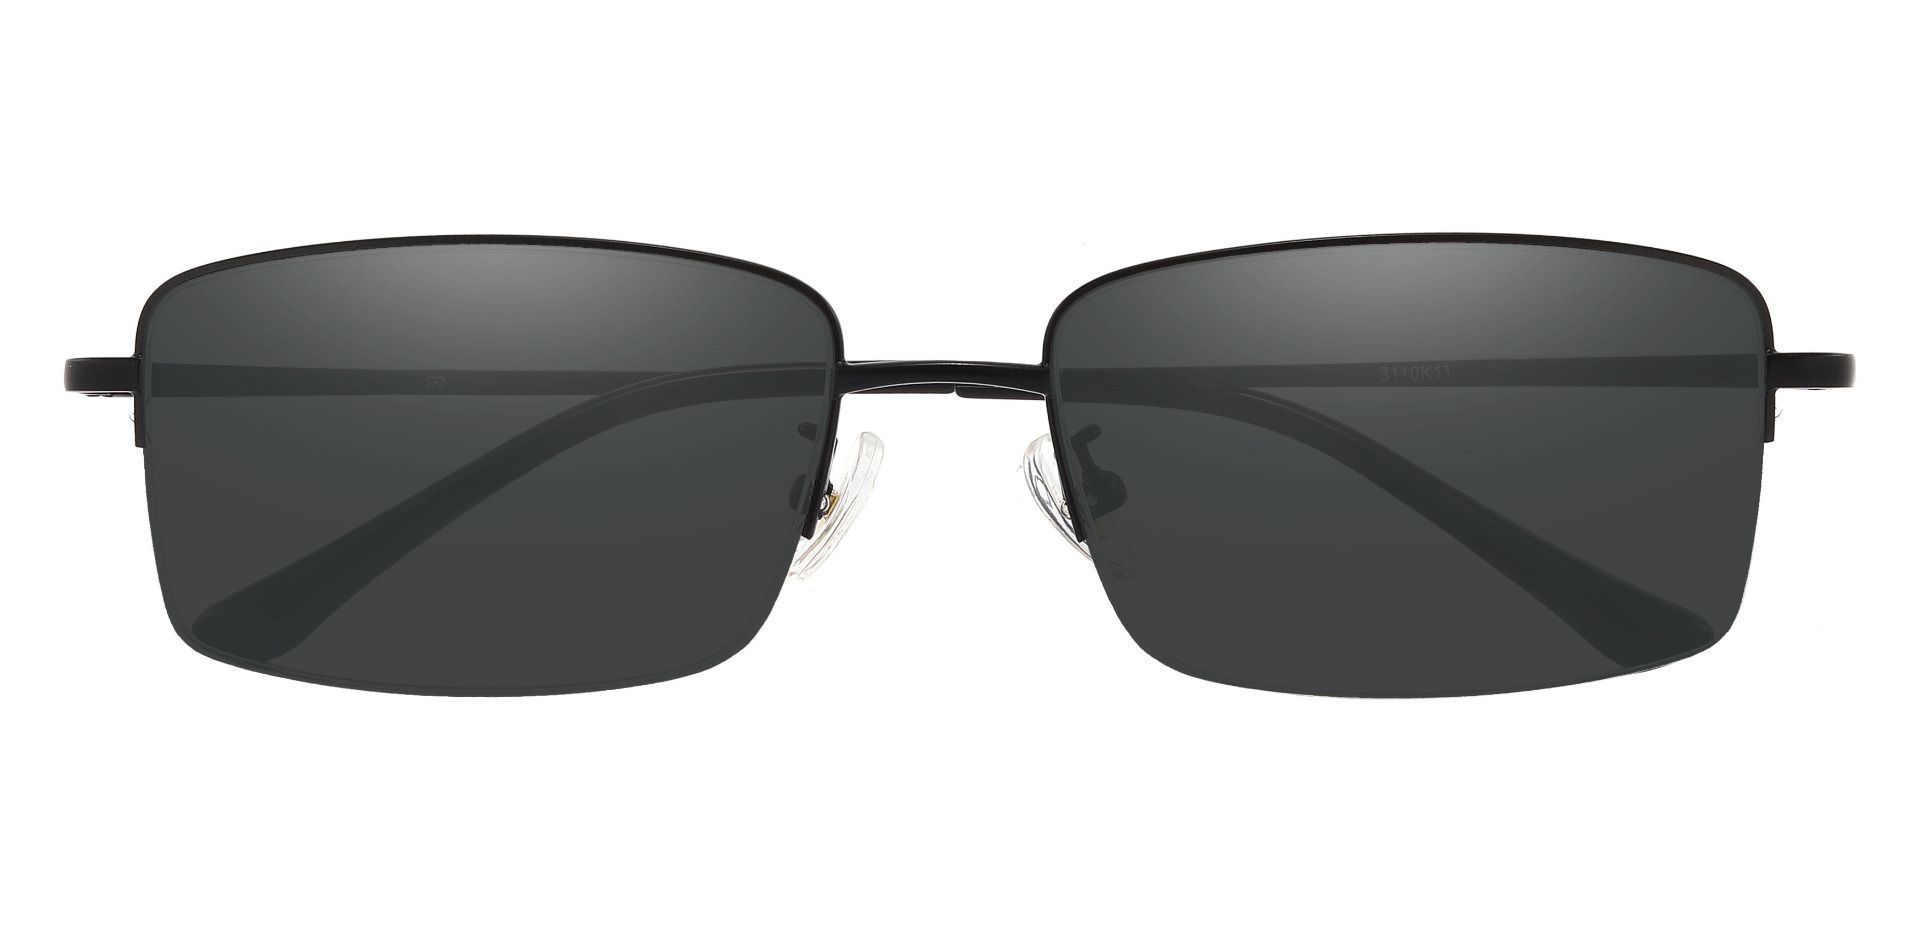 Bellmont Rectangle Reading Sunglasses - Black Frame With Gray Lenses